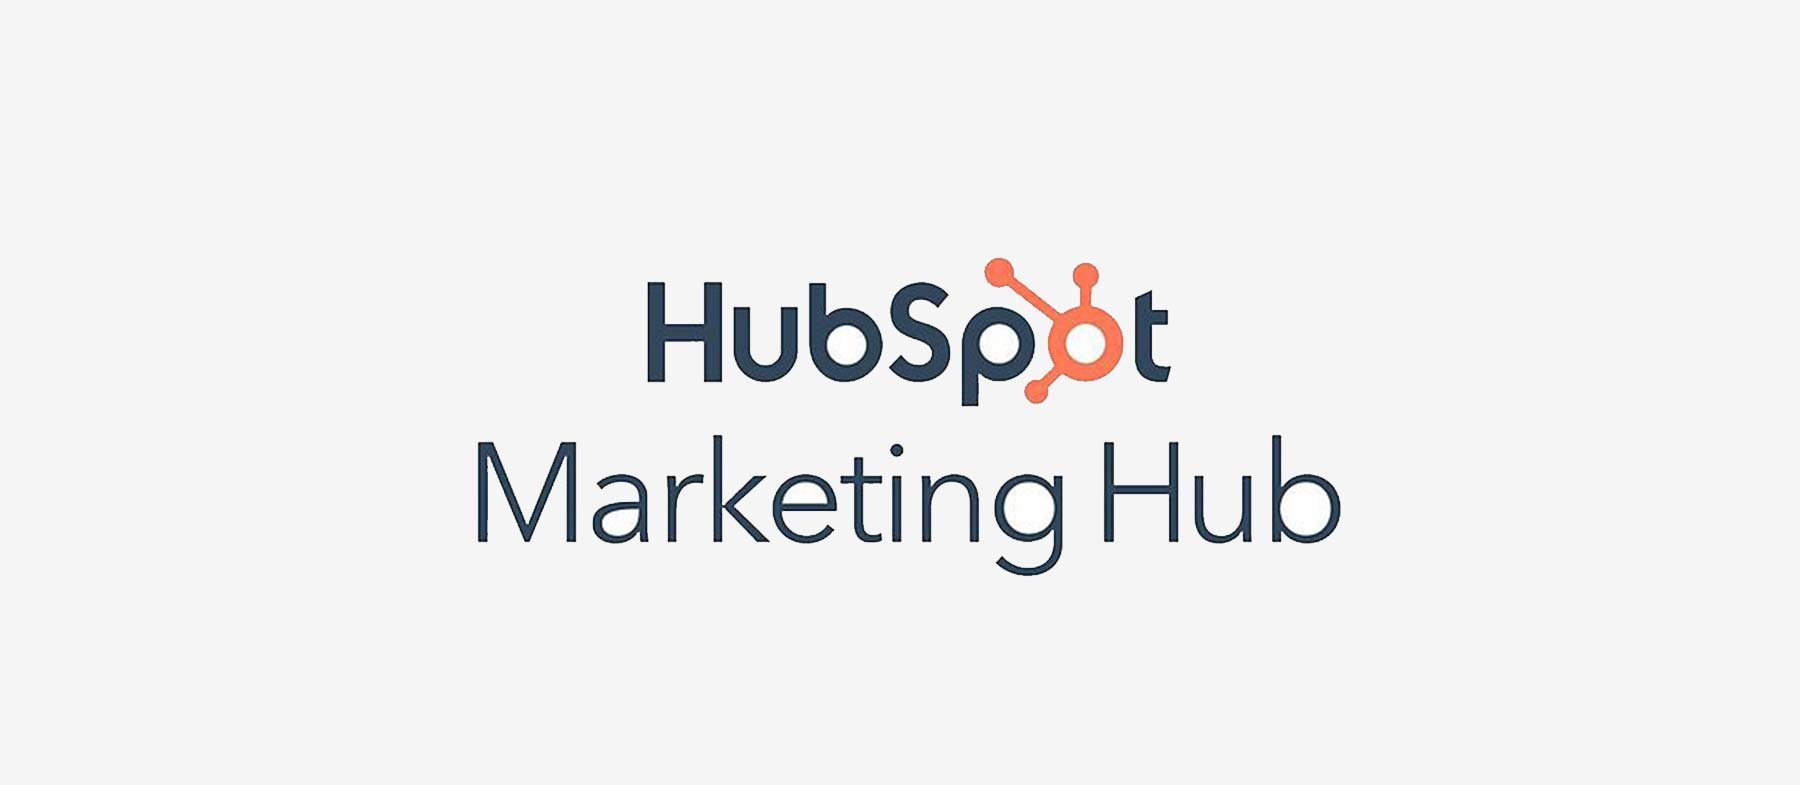 hubspot-marketing-hub